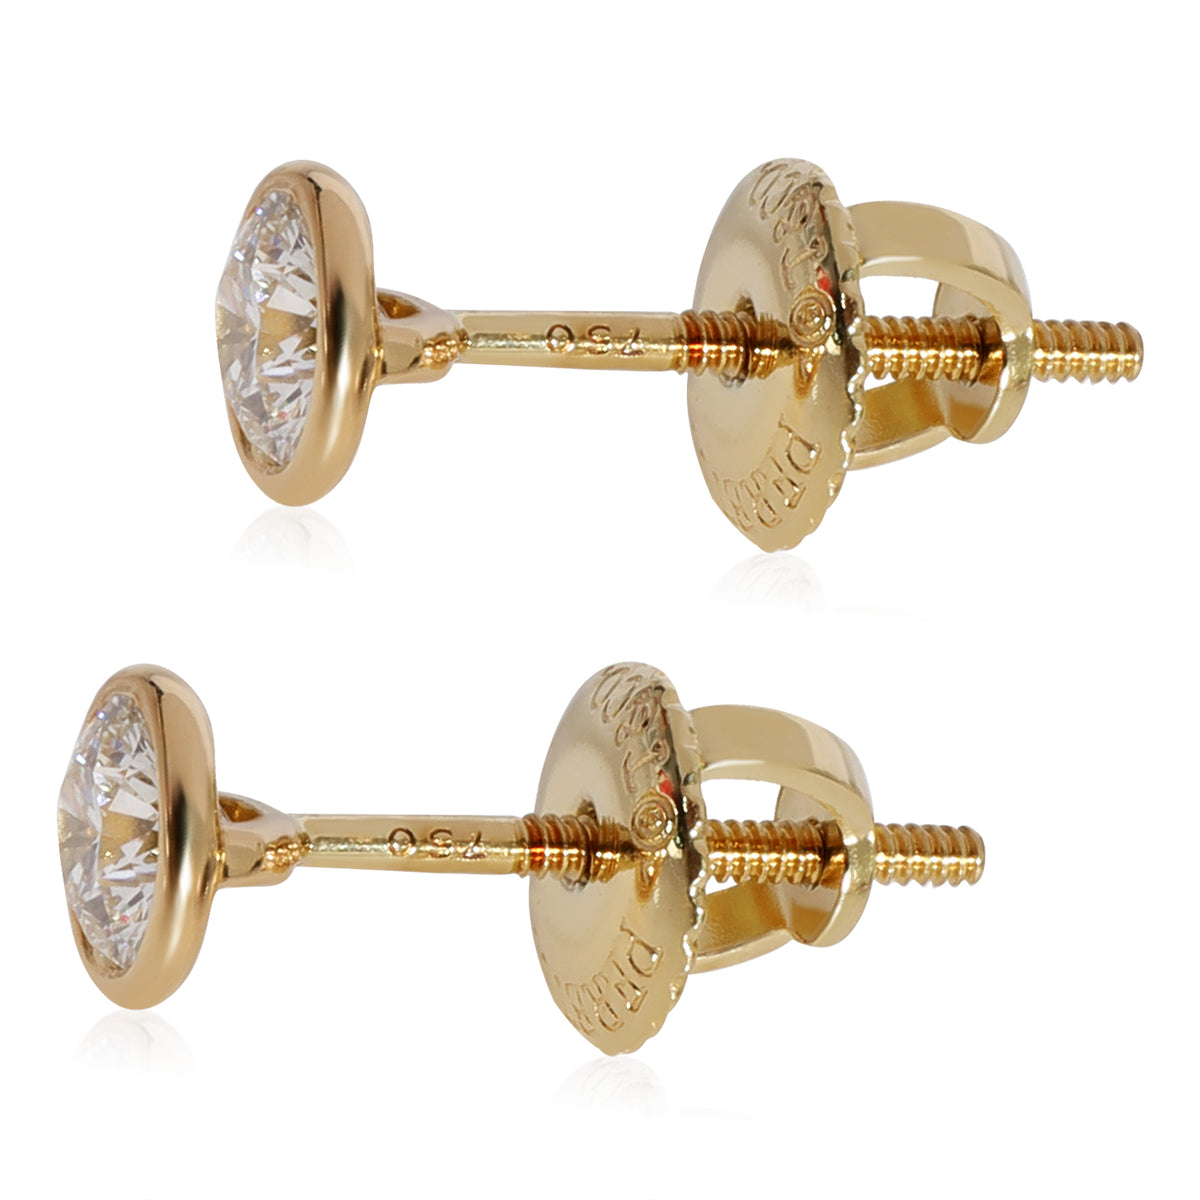 Tiffany & Co. Elsa Peretti Diamond Earrings in 18k Yellow Gold 0.34 CTW